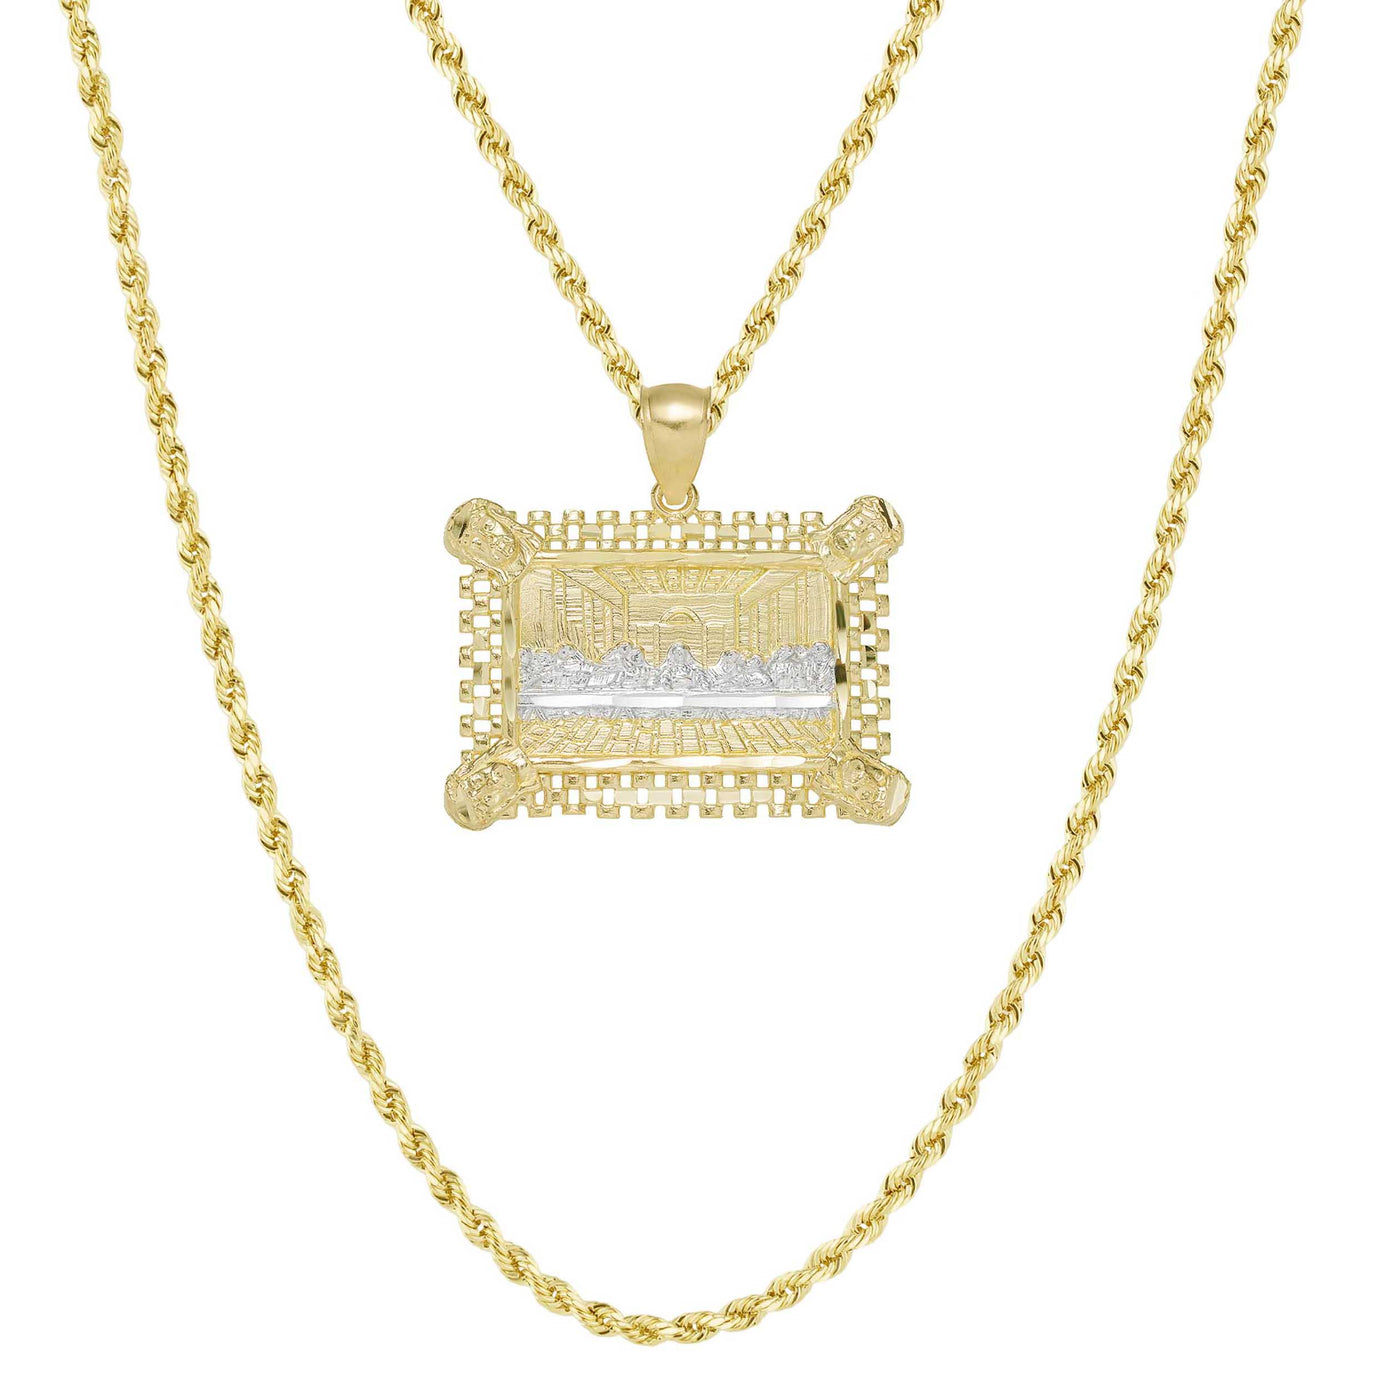 1 1/2" Rectangle Railroad Last Supper Medallion Pendant & Chain Necklace Set 10K Yellow White Gold